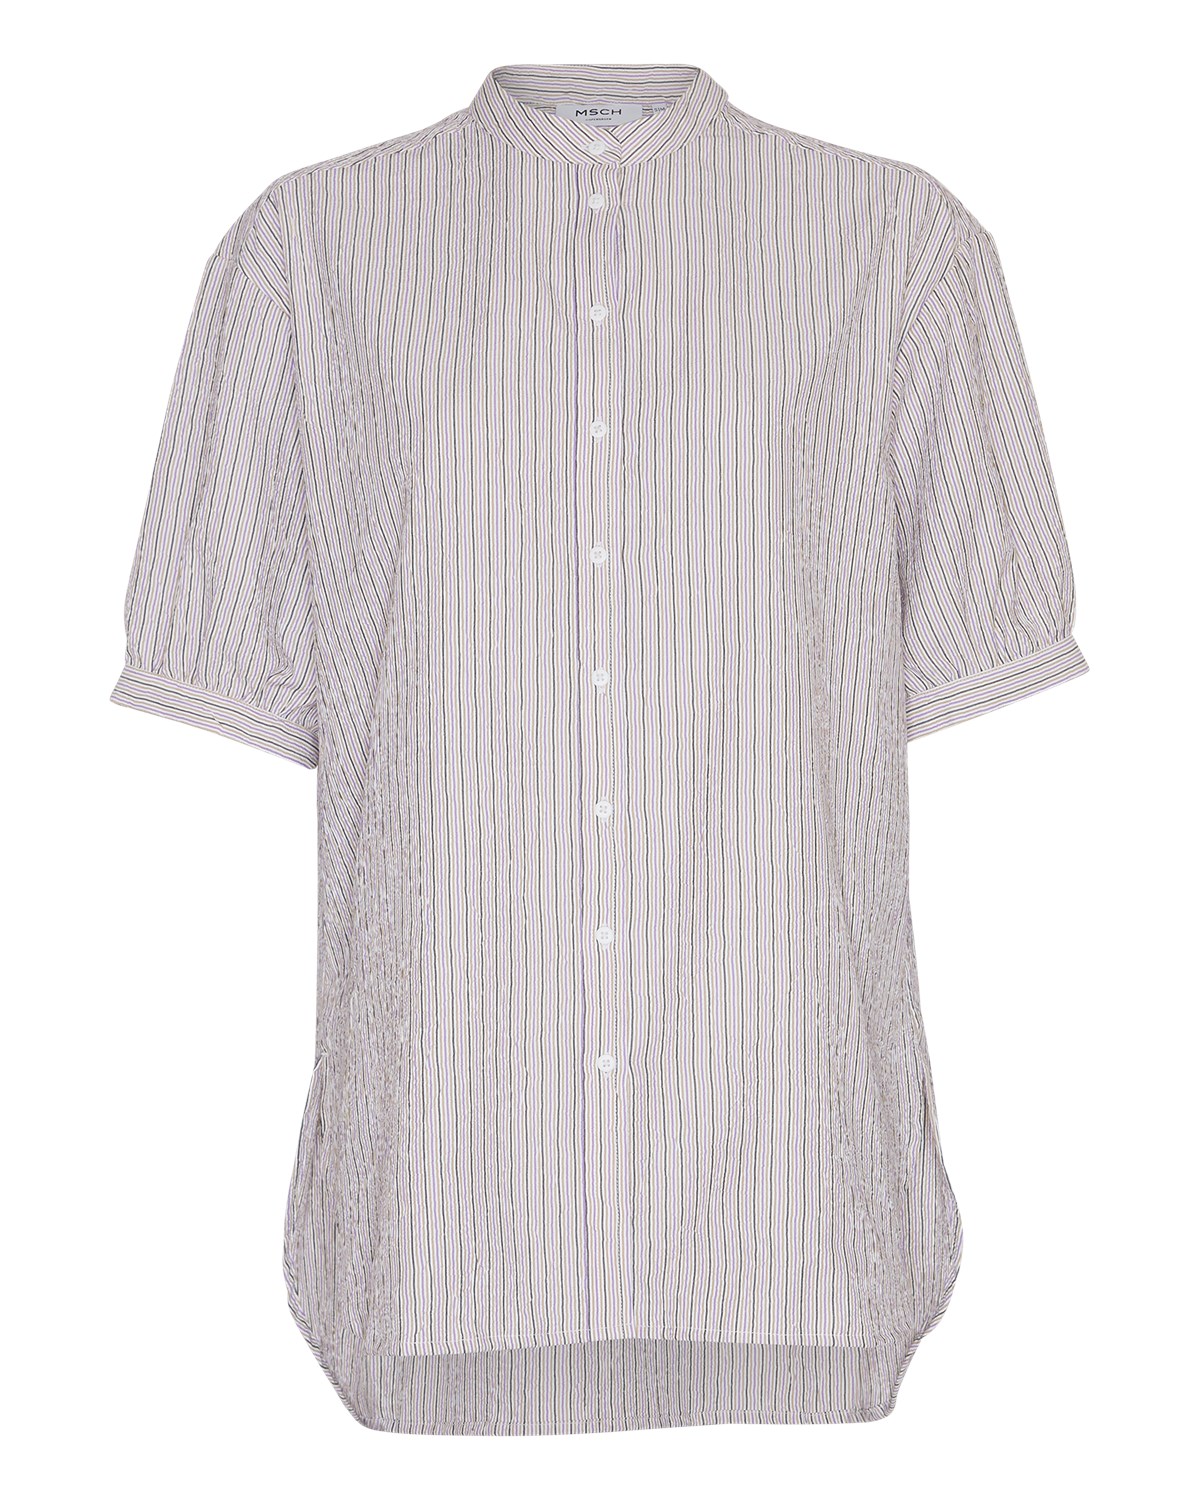 MSCH Adara 2/4 Shirt, stripet storskjorte